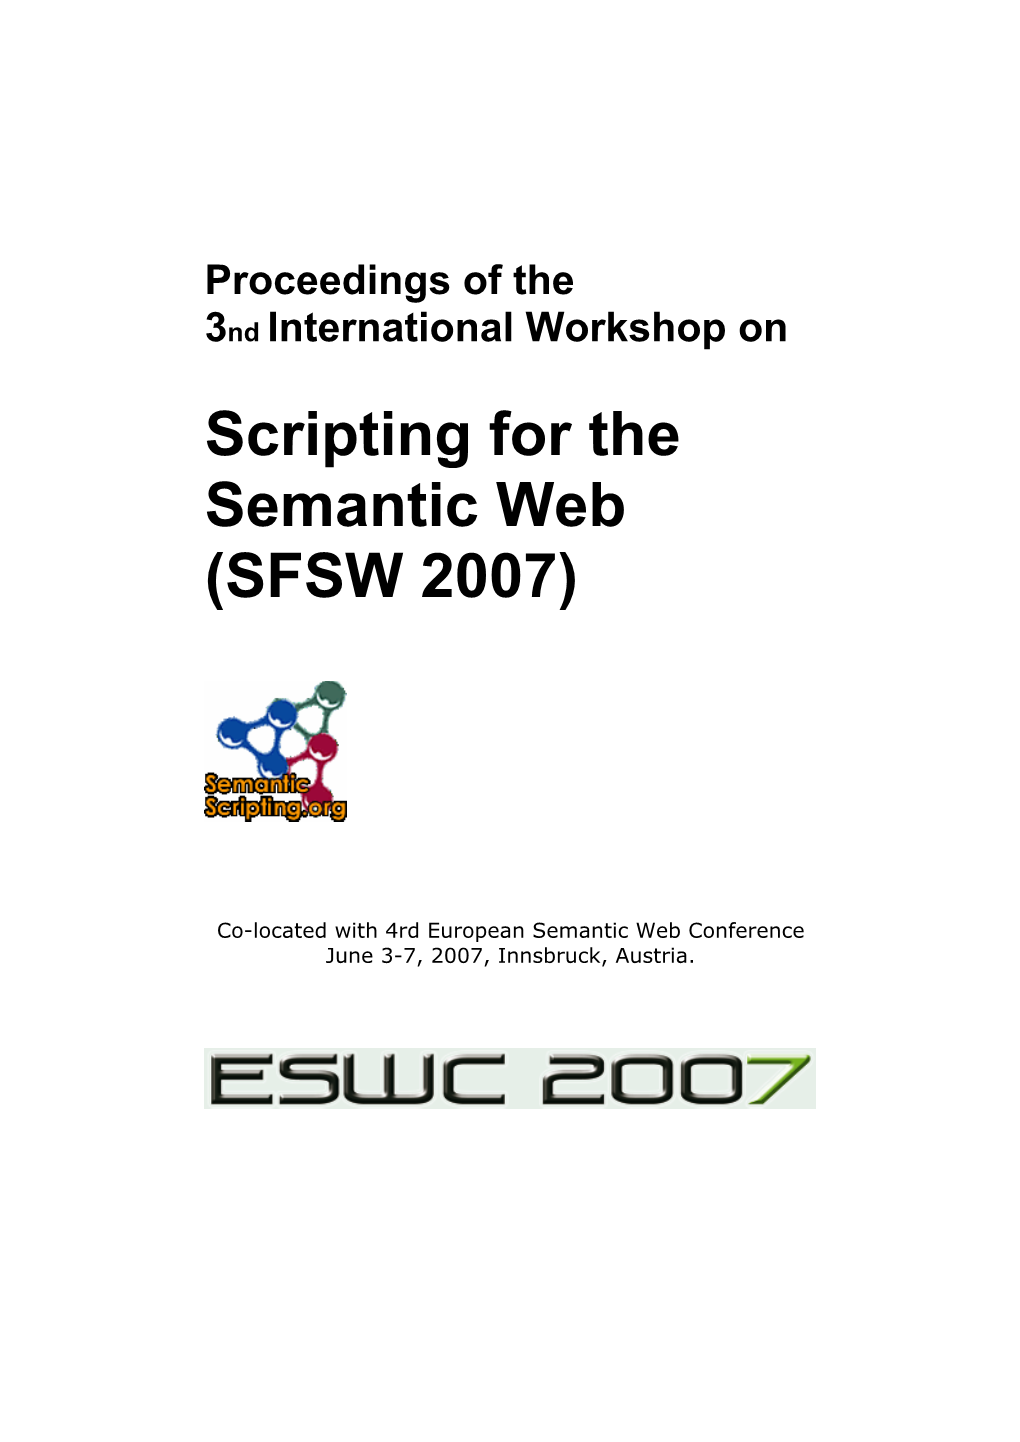 Proceedings of the 3Rd International Semantic Web User Interaction Workshop, 2006